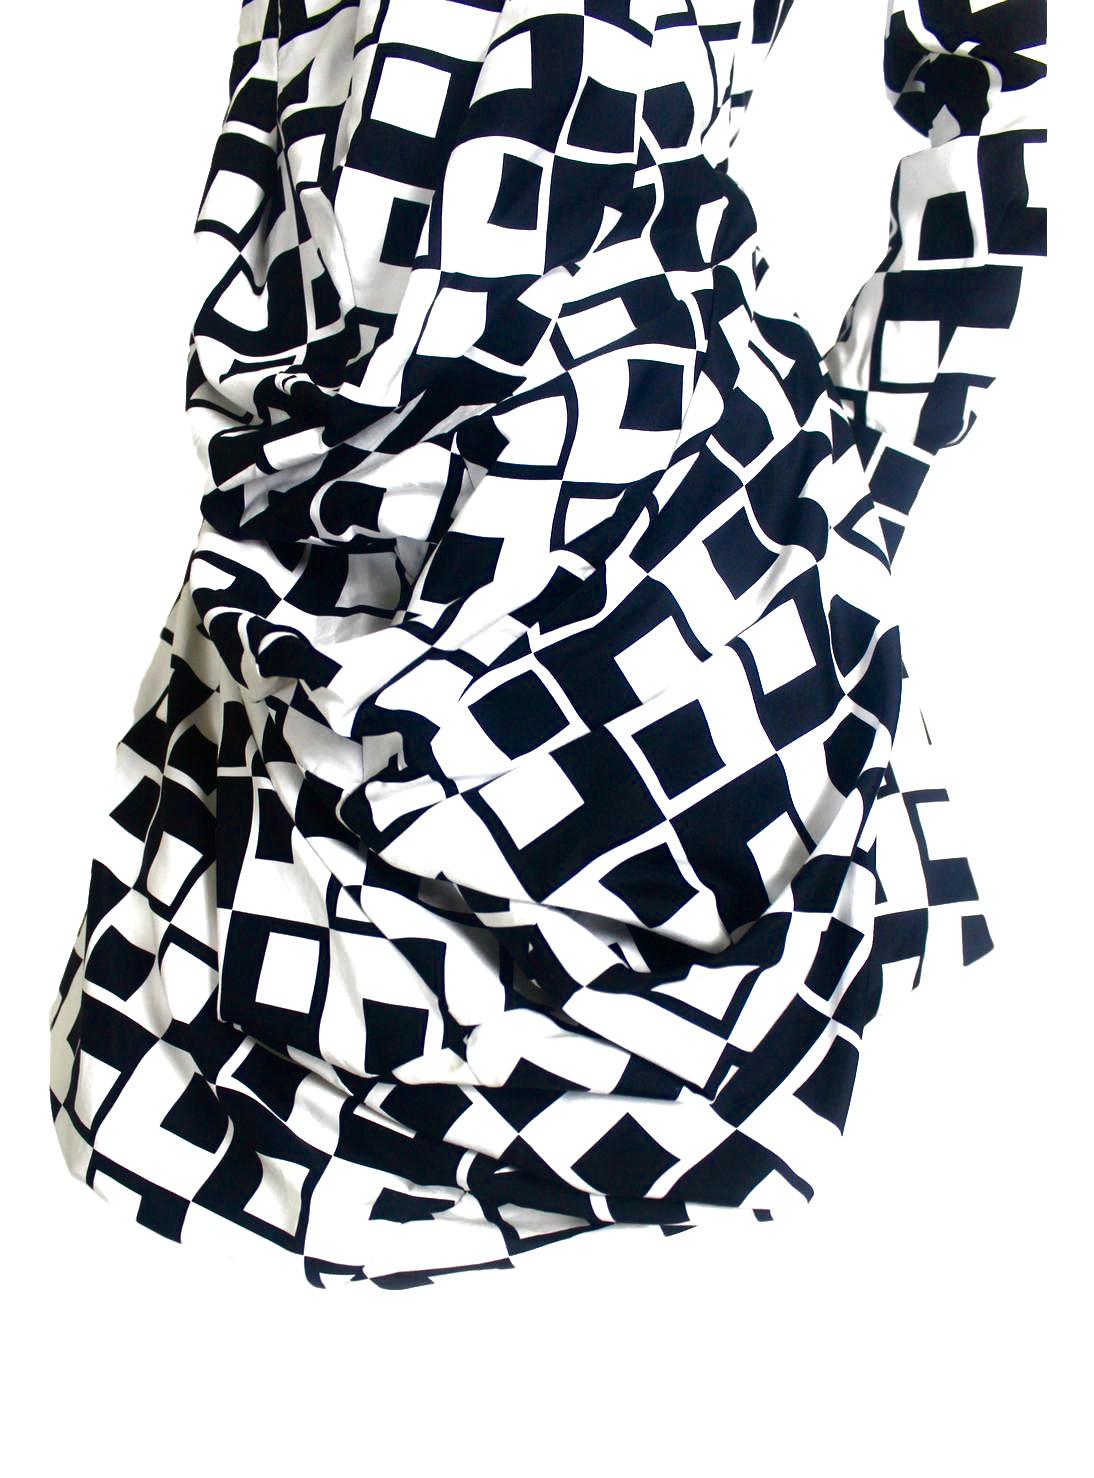 Black Comme des Garcons Junya Watanabe Geometric Dress AD 2009 For Sale